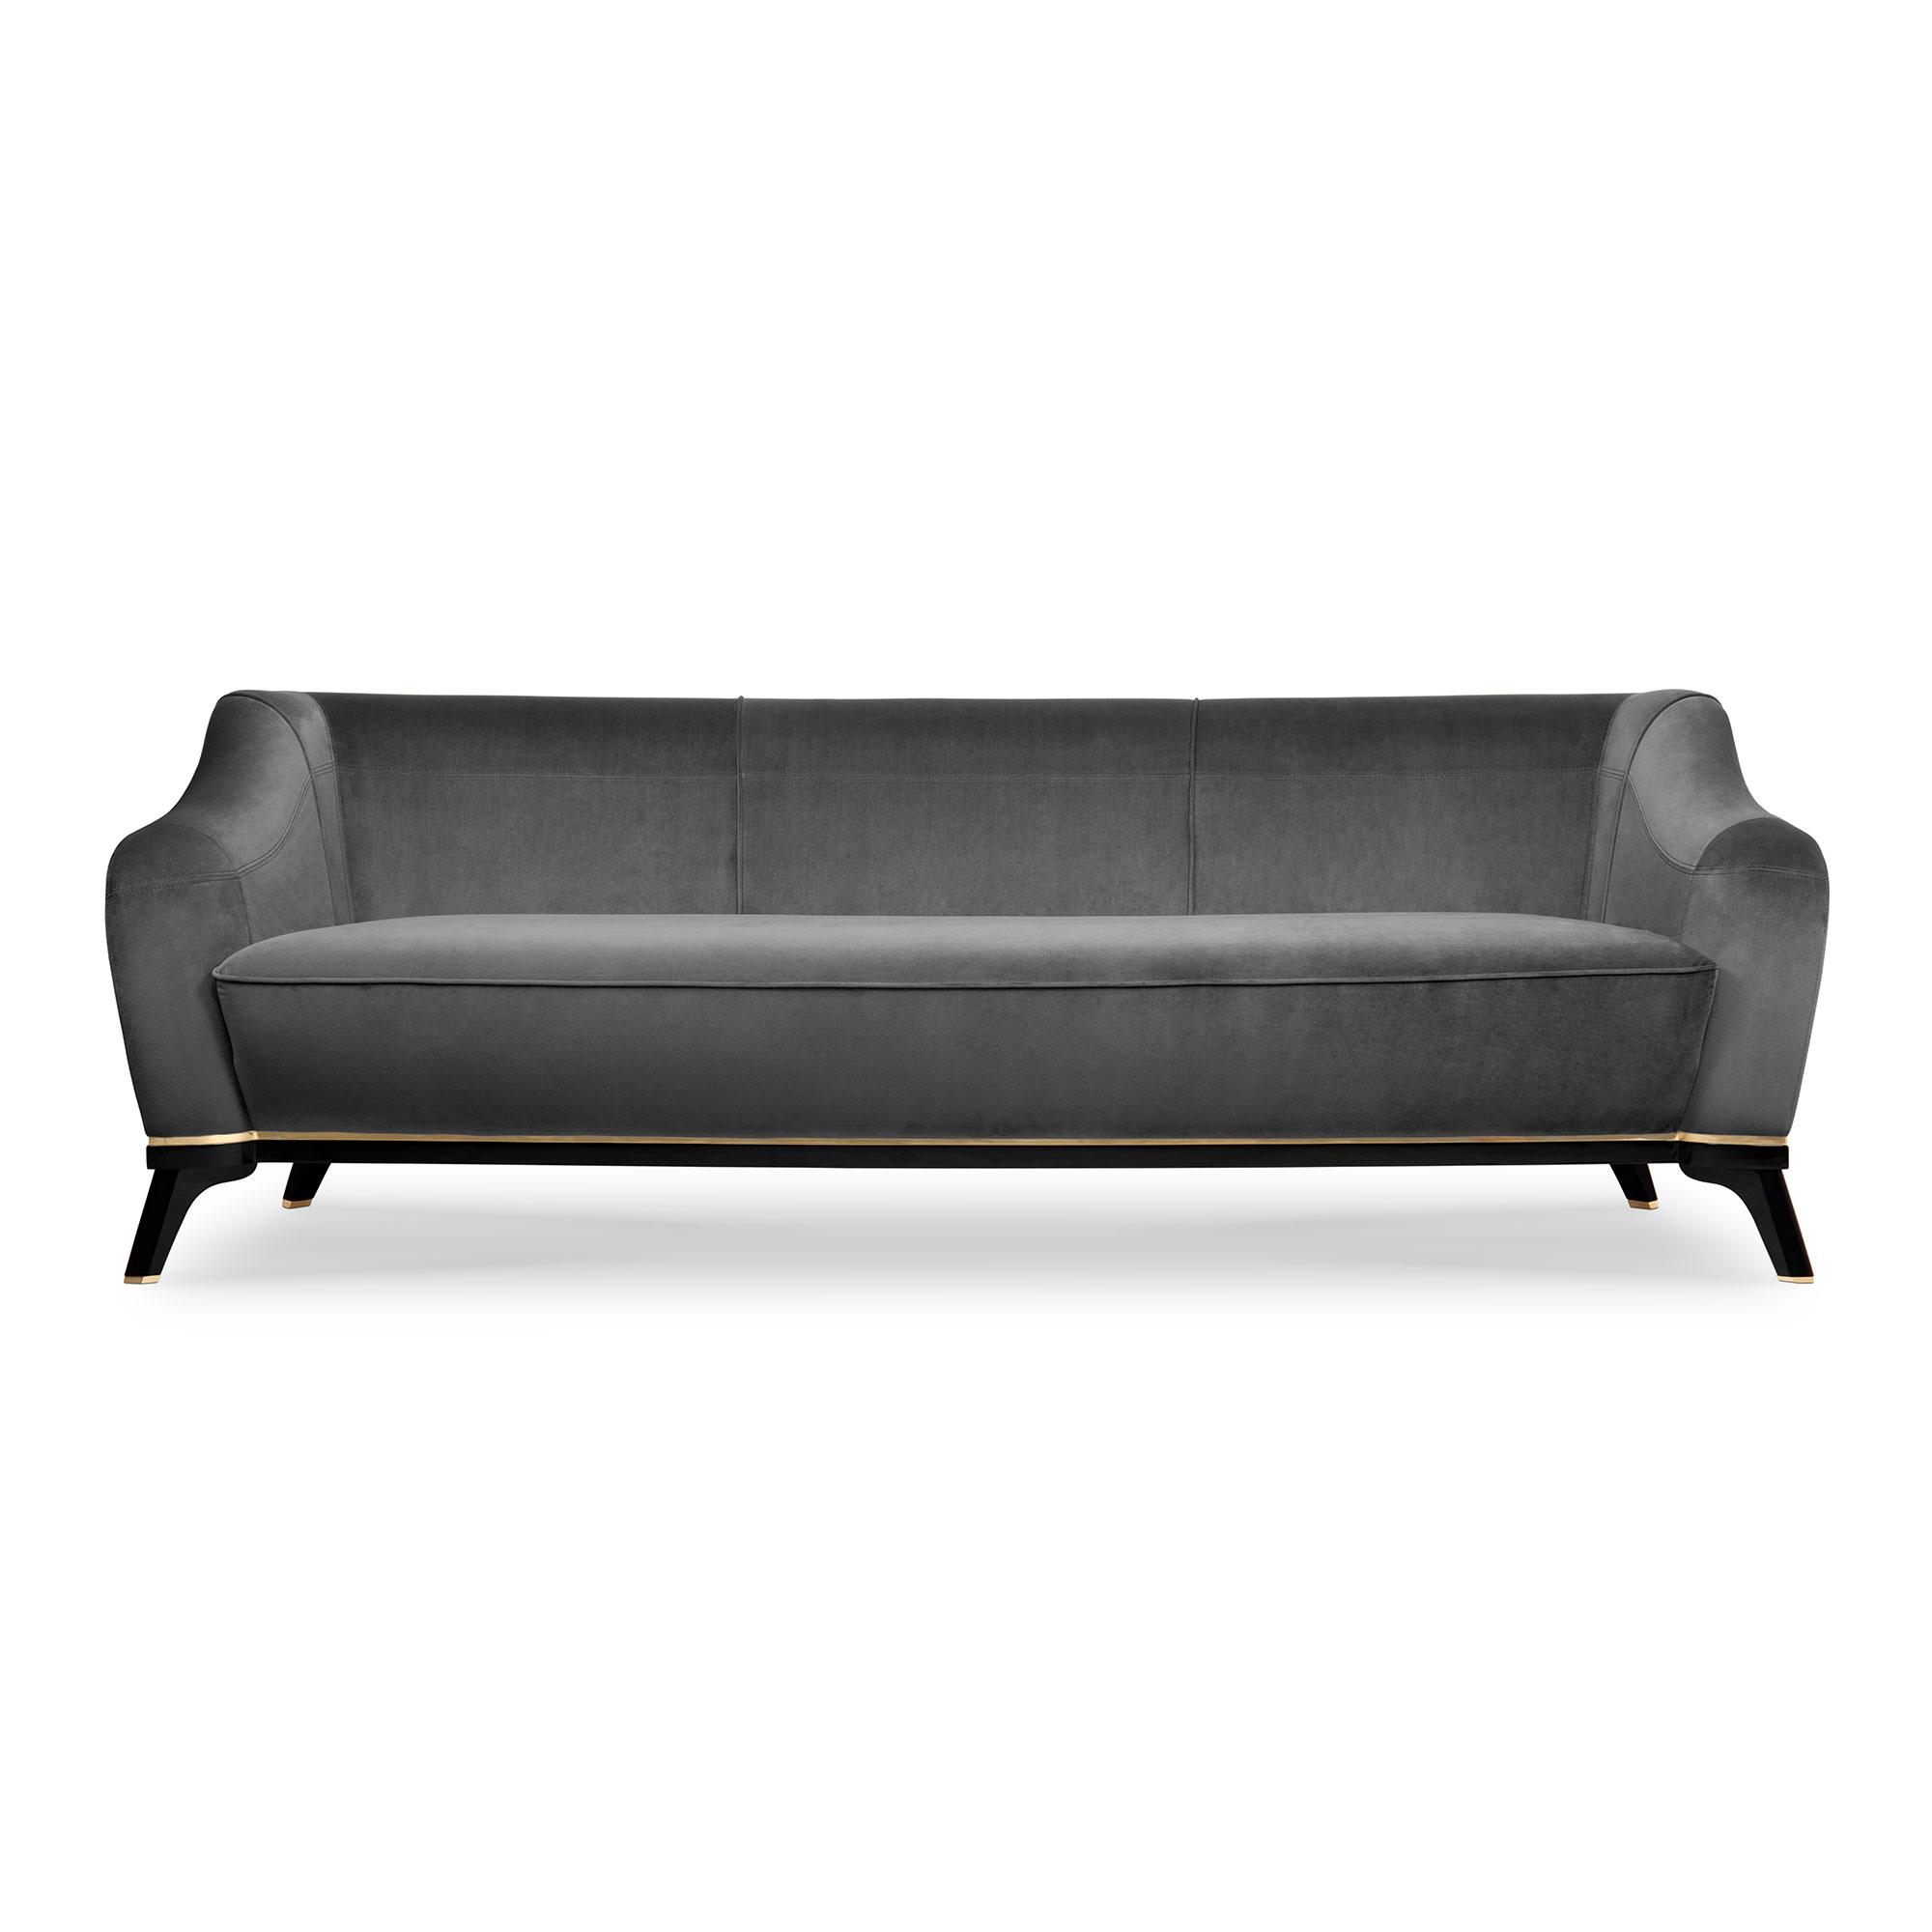 Saboteur Sofa By Luxxu